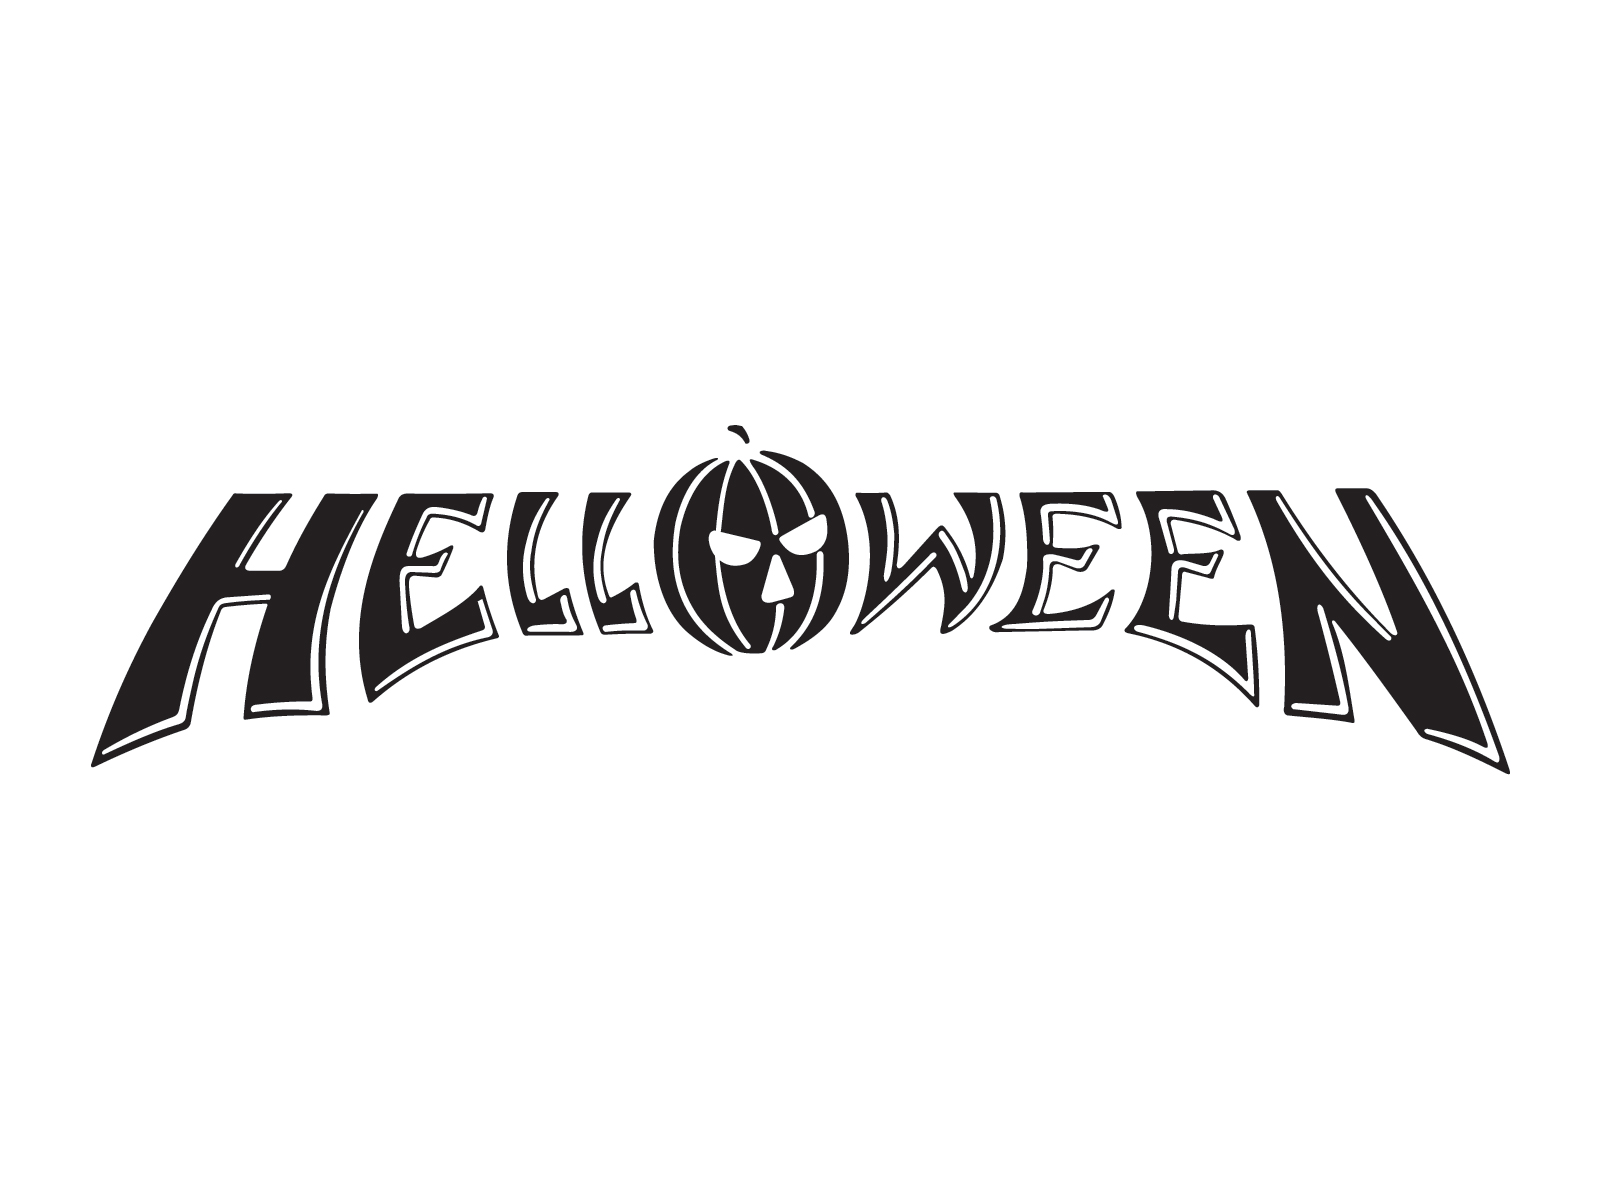 Helloween logo wallpaper | Band logos - Rock band logos, metal bands logos,  punk bands logos